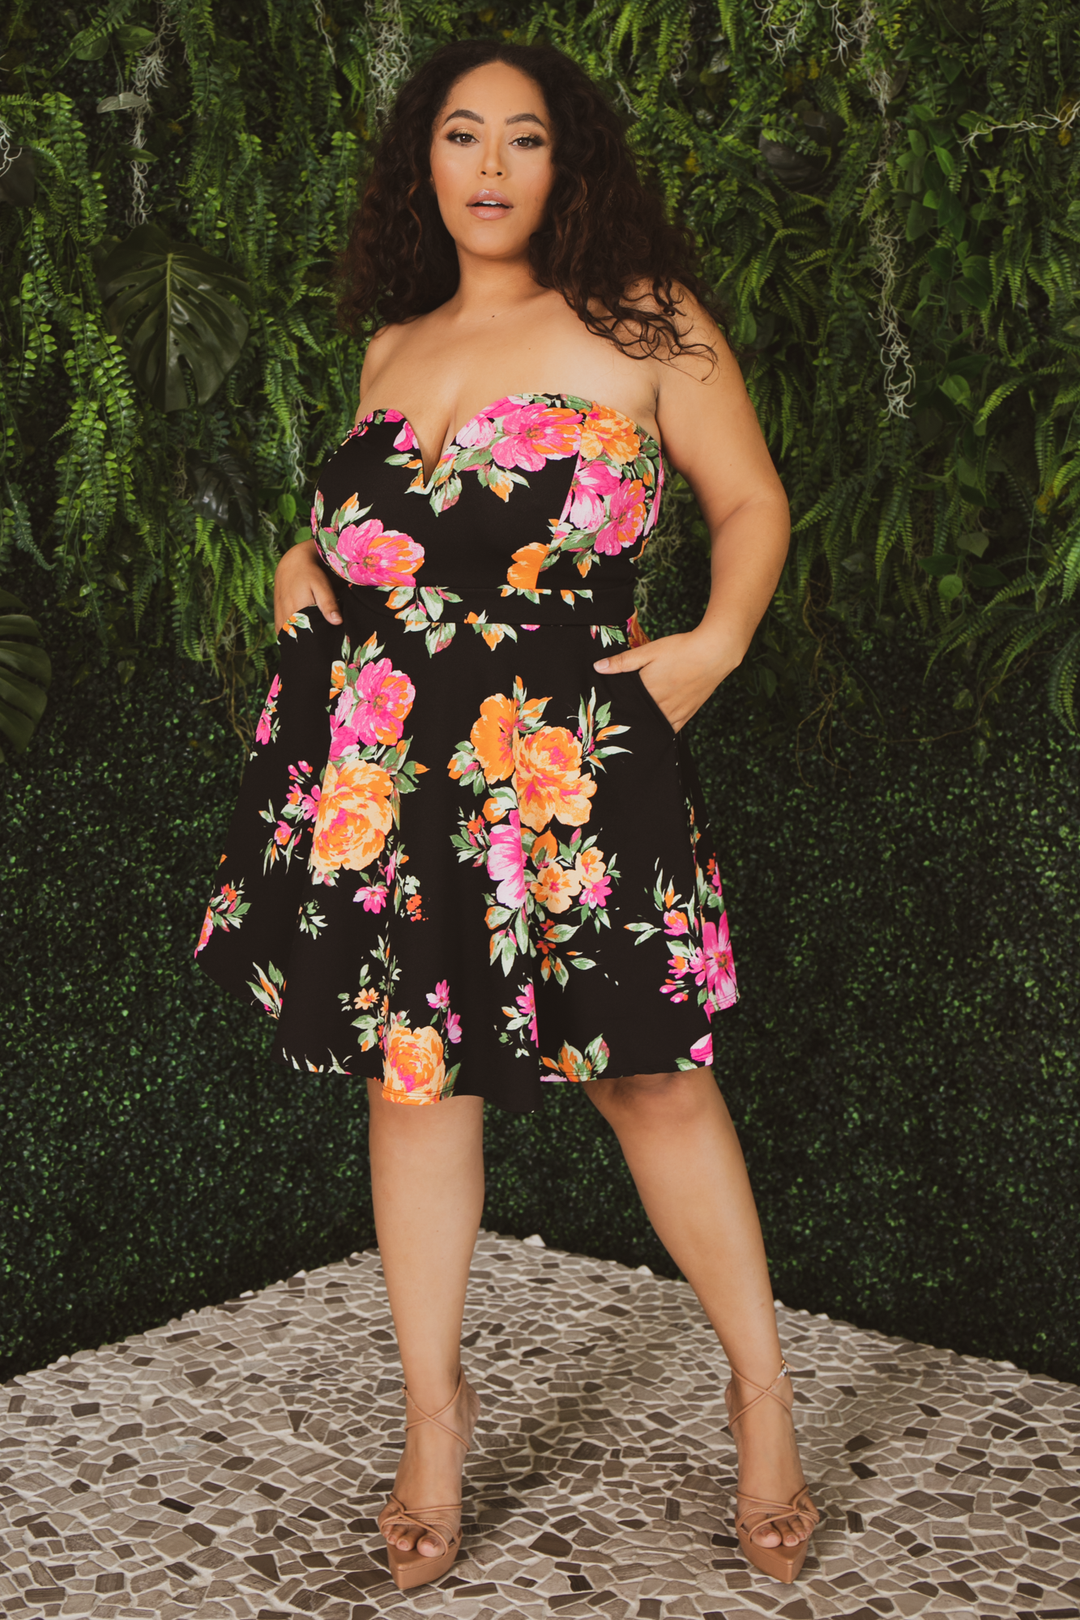 Curvy Sense Dresses Plus Size Amaryllis Floral  Flare Dress - Black